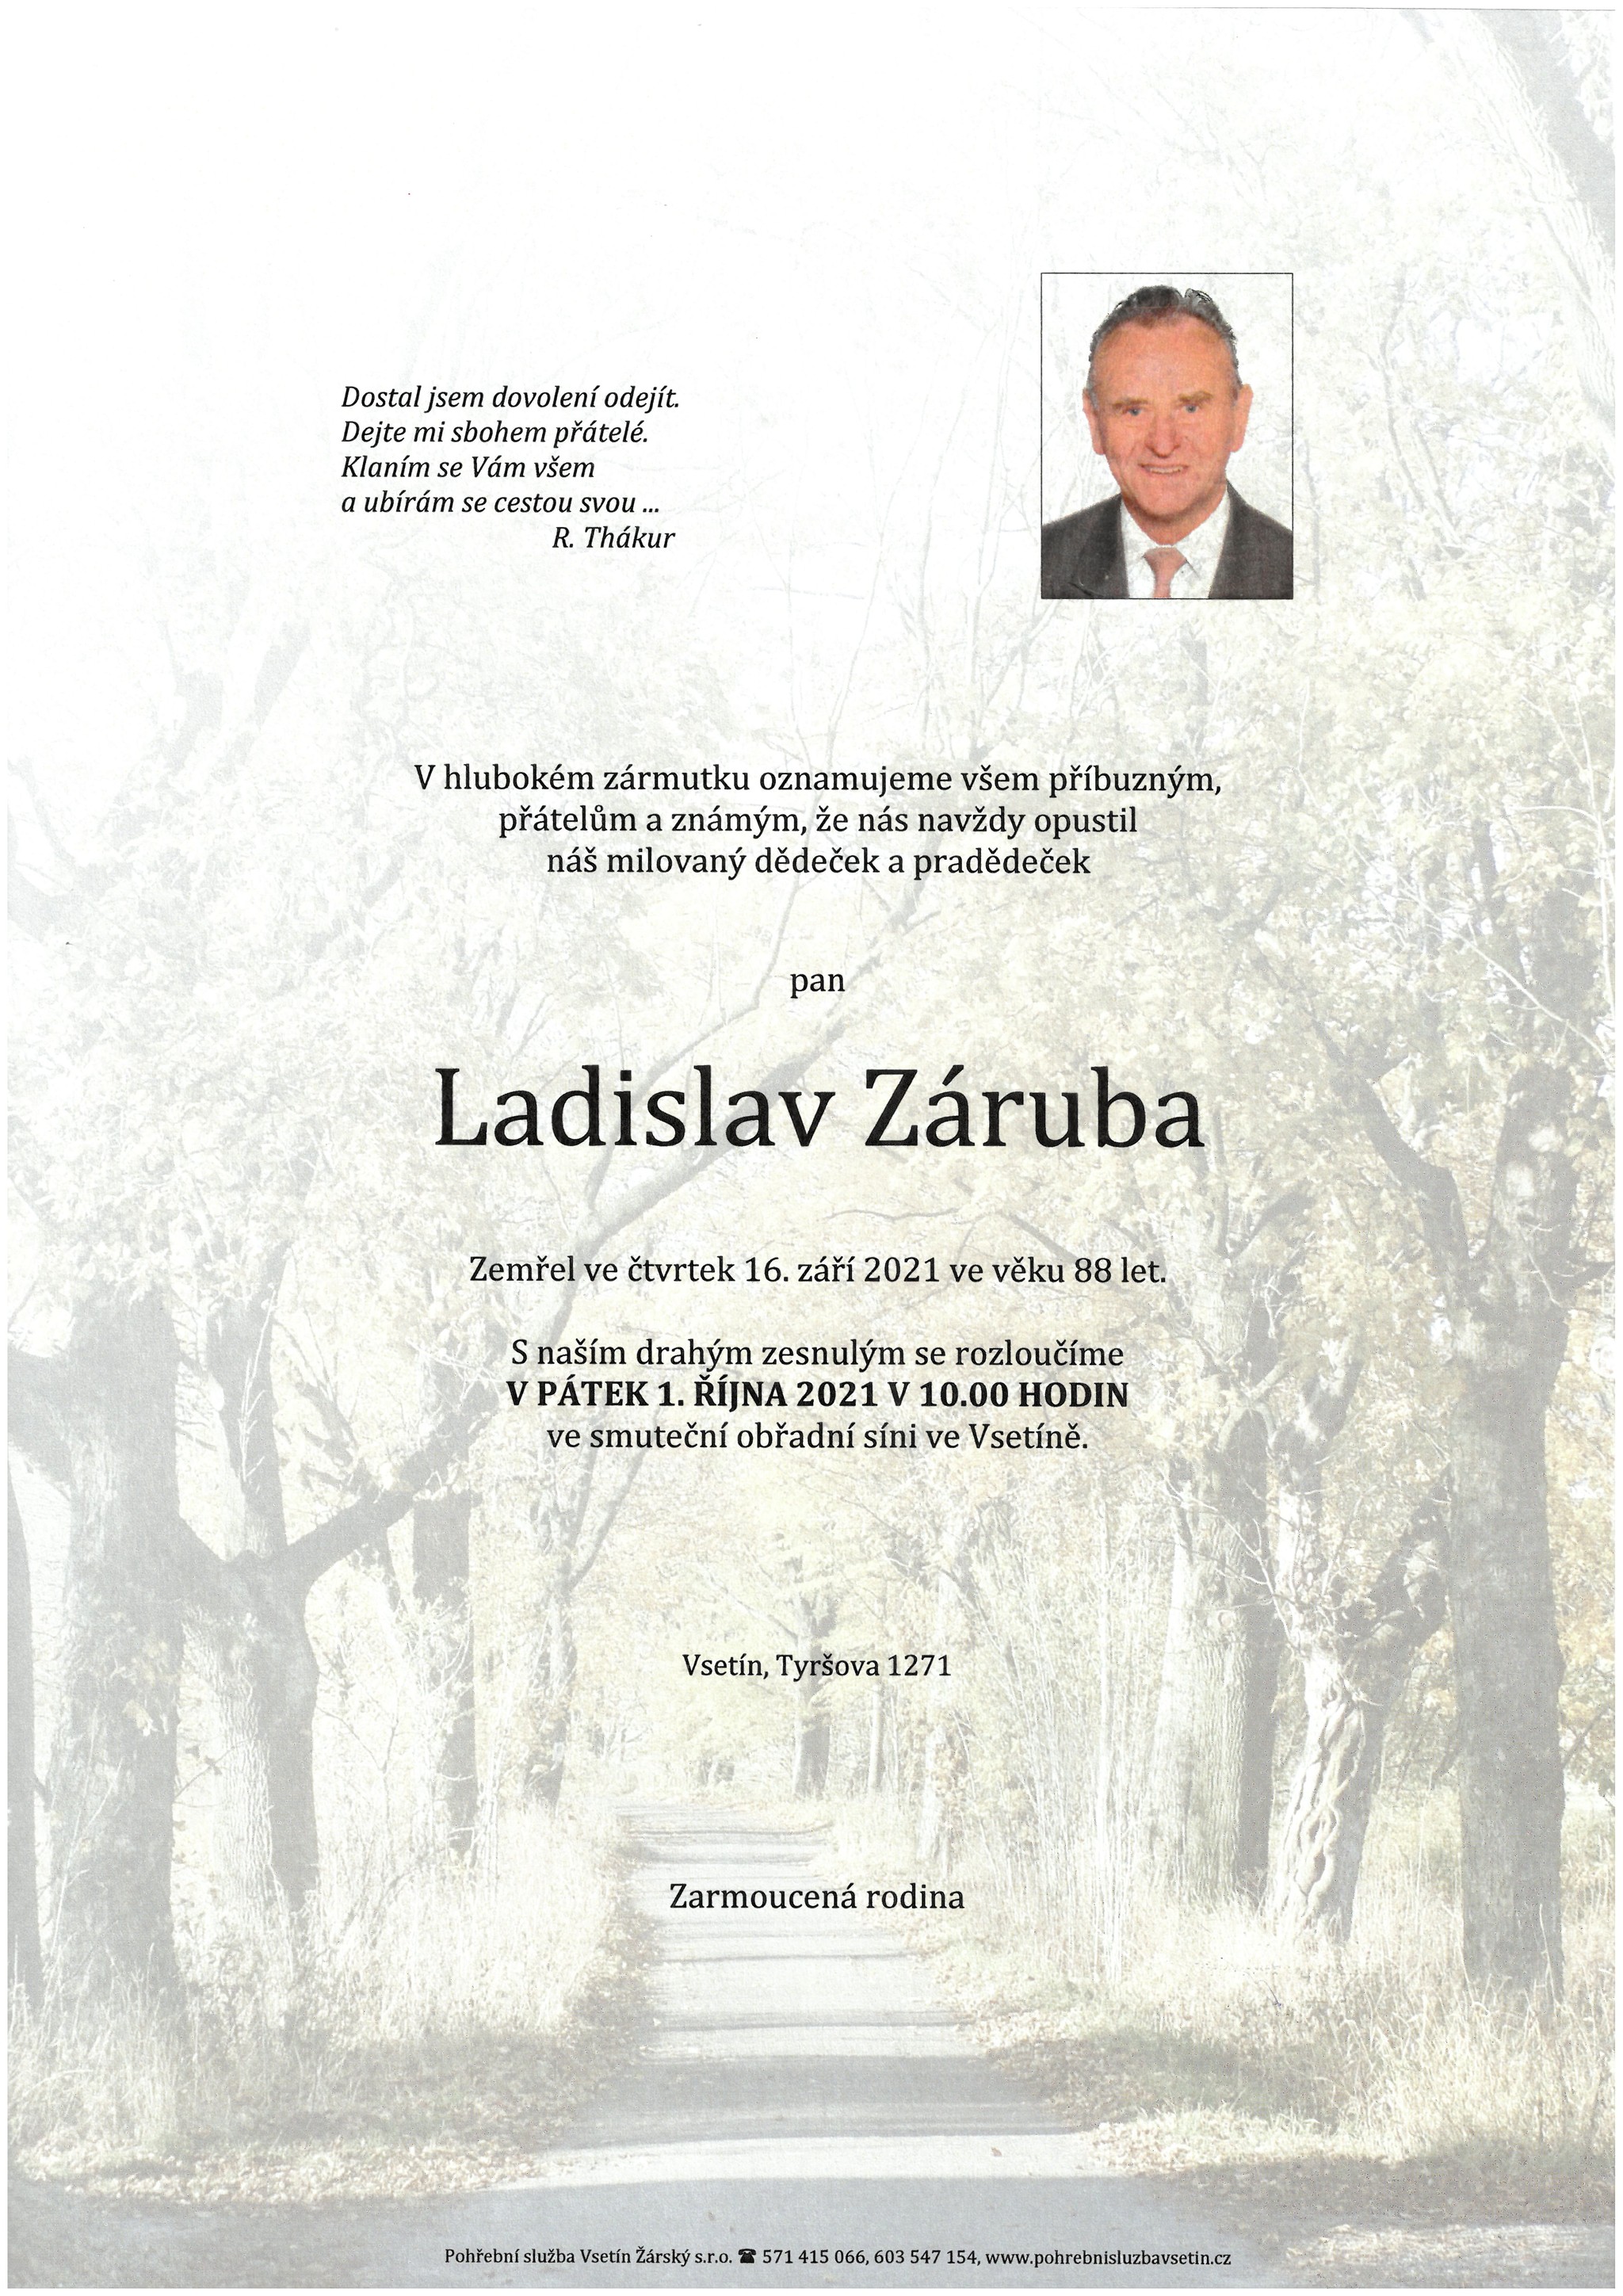 Ladislav Záruba